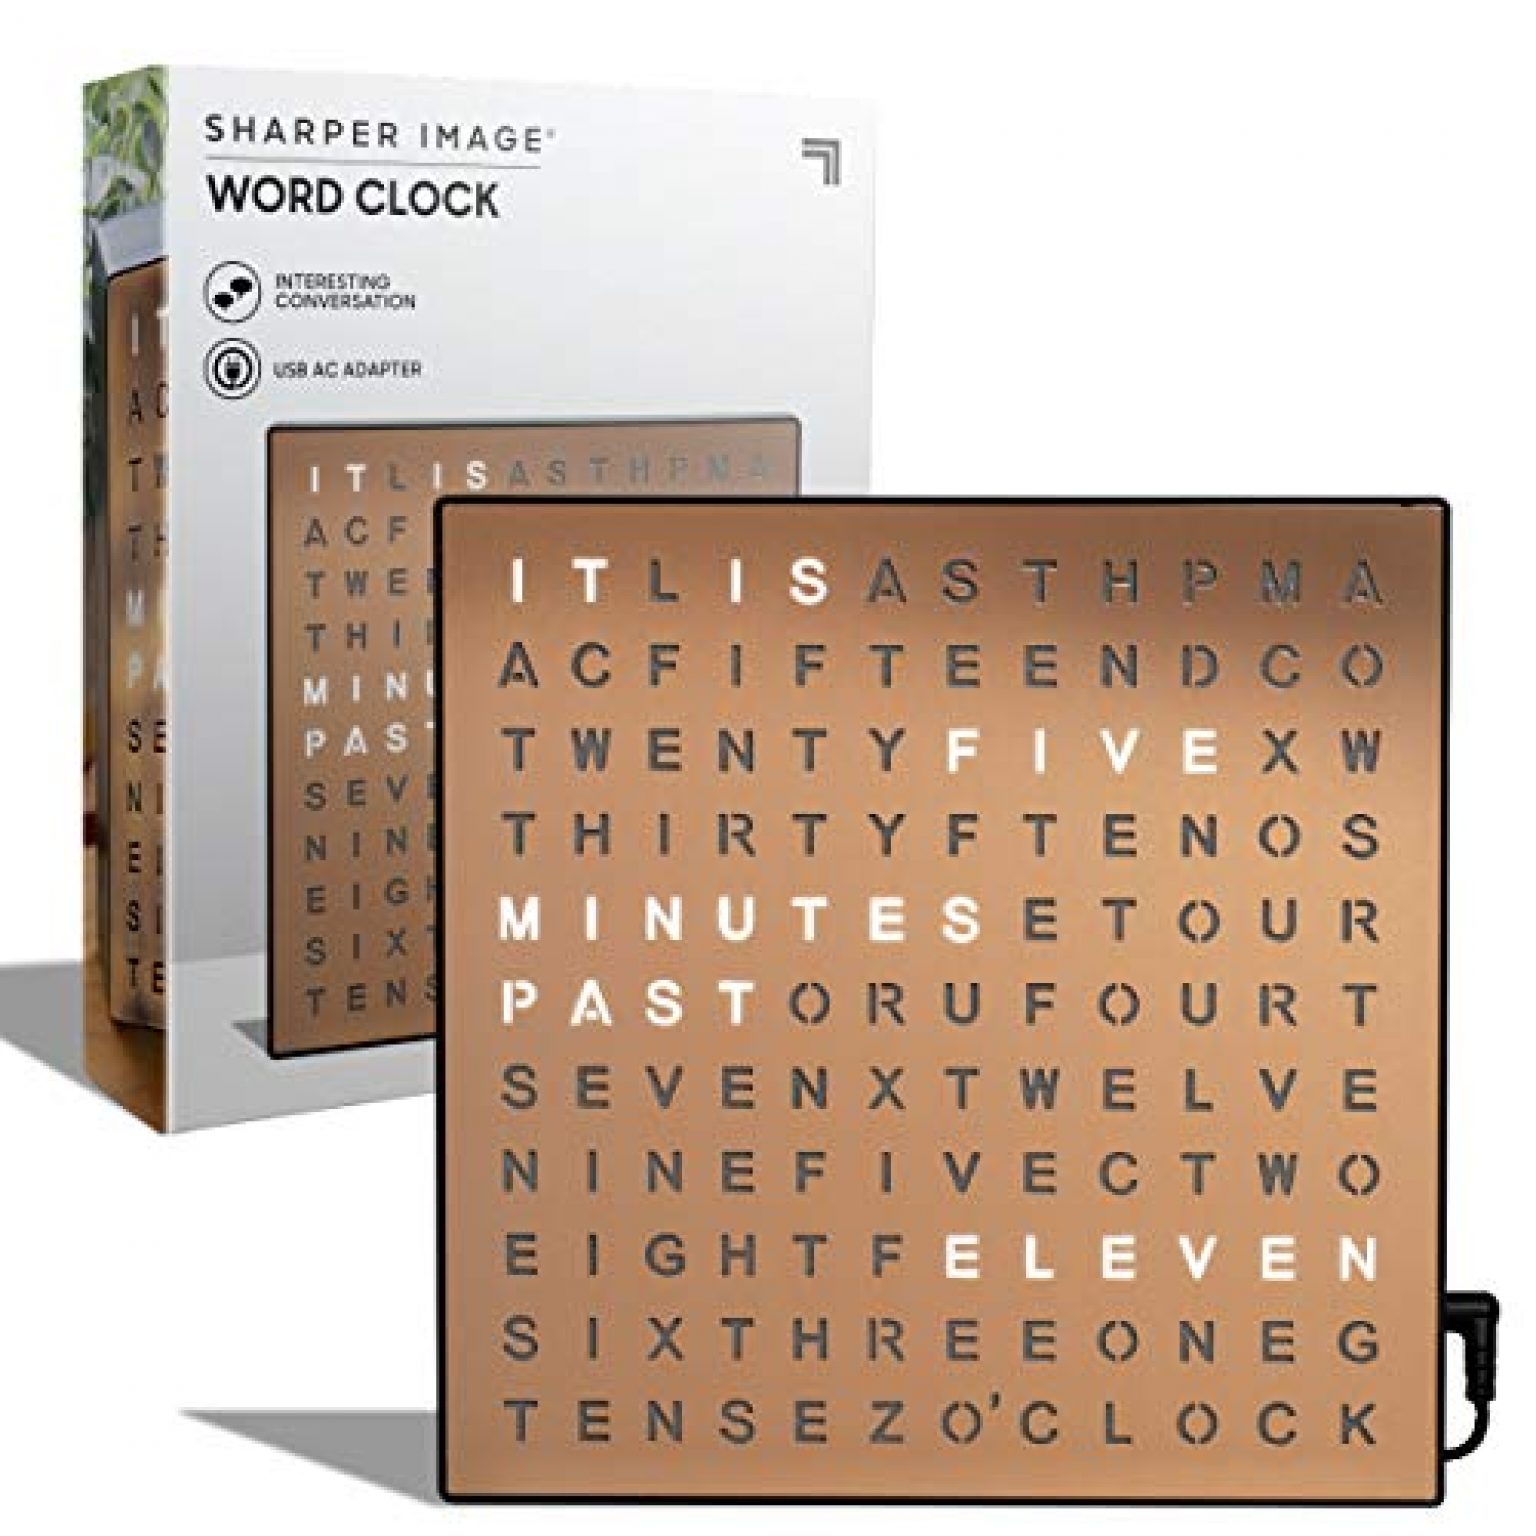 sharper image word clock